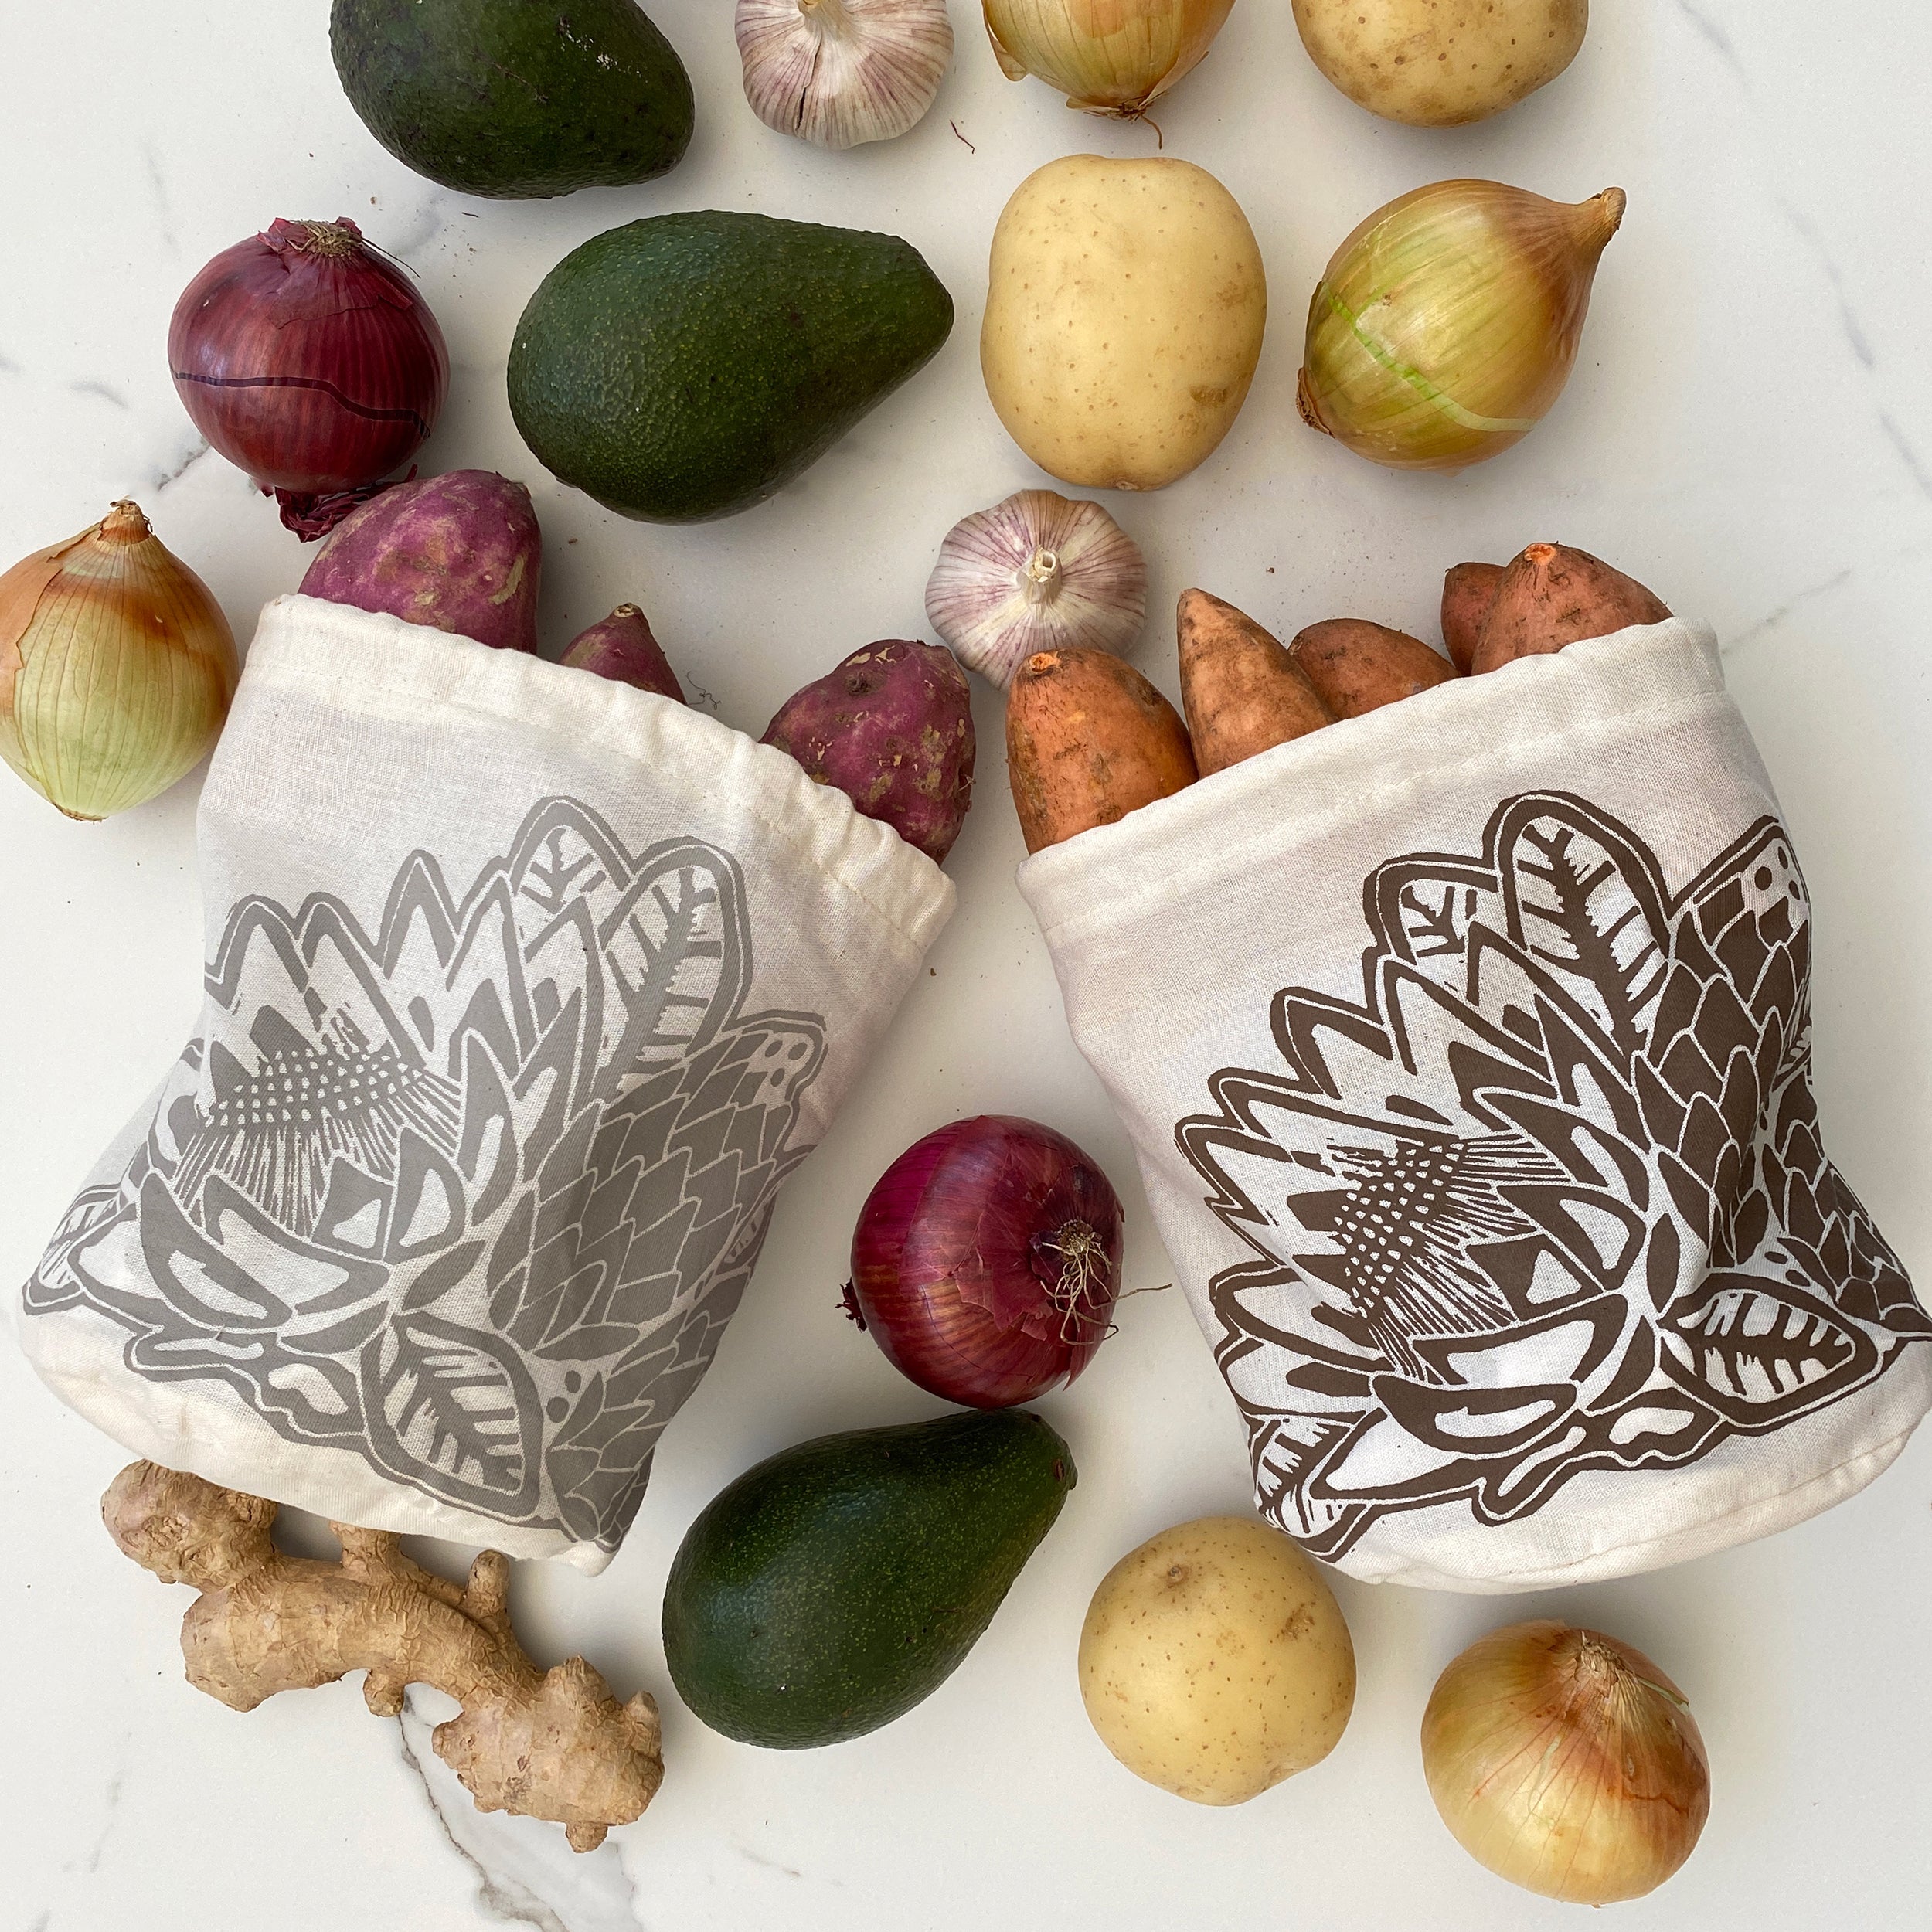 Produce Bag Short | reusable veggie bag shopping bag for fruit and vegetables